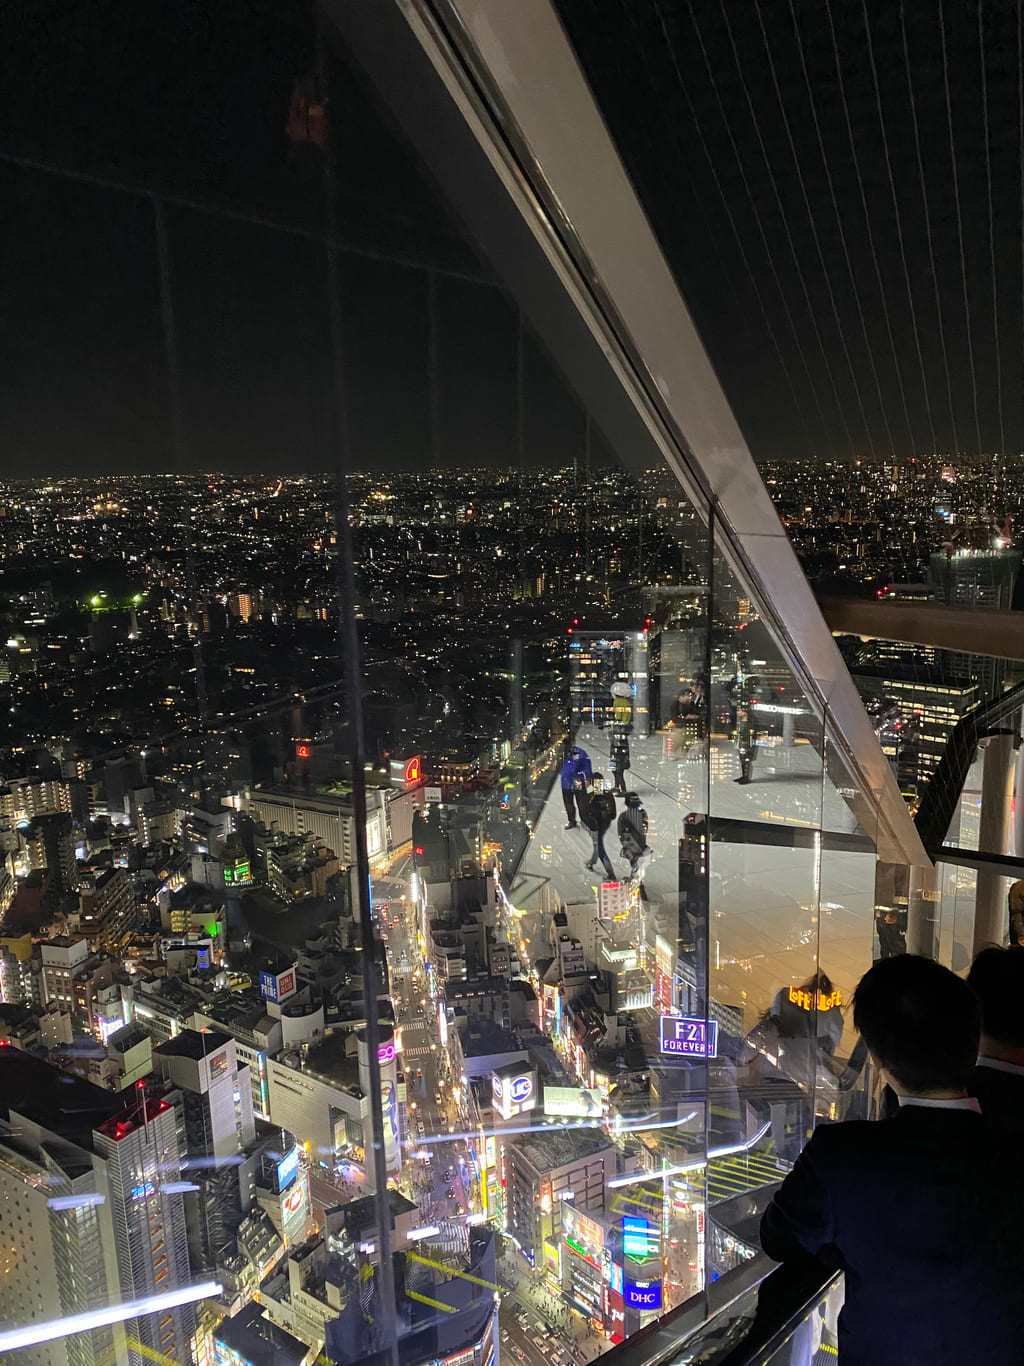 Iphone 11 Pro Maxで撮る渋谷夜景 新規開業 渋谷スクランブルスクエア46fのshibuya Skyへ Makkyon Web